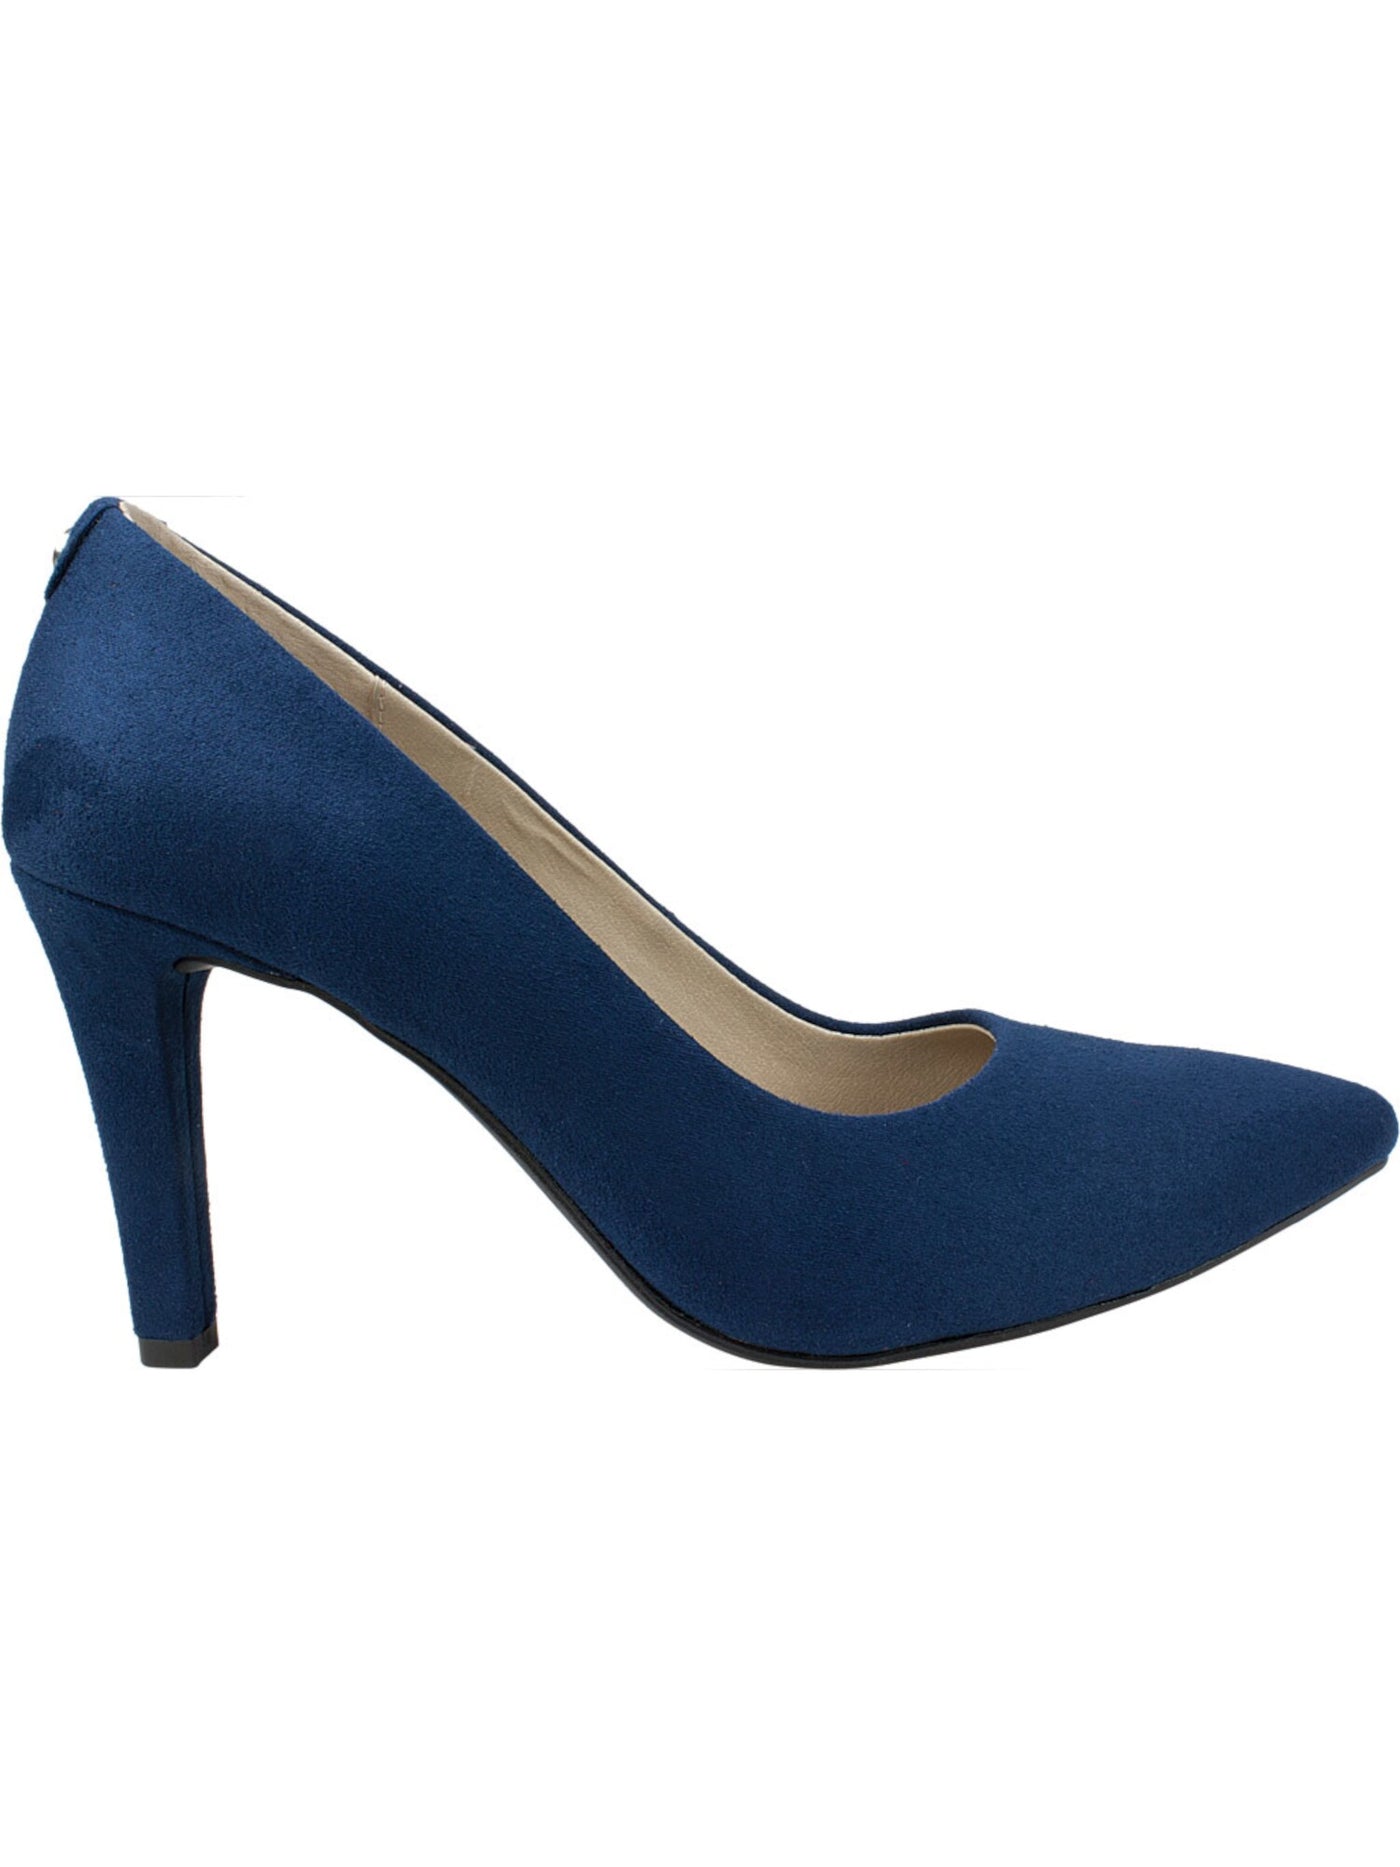 RIALTO Womens Blue Metallic Stud Padded Murphy Pointed Toe Stiletto Slip On Dress Pumps Shoes 6.5 M